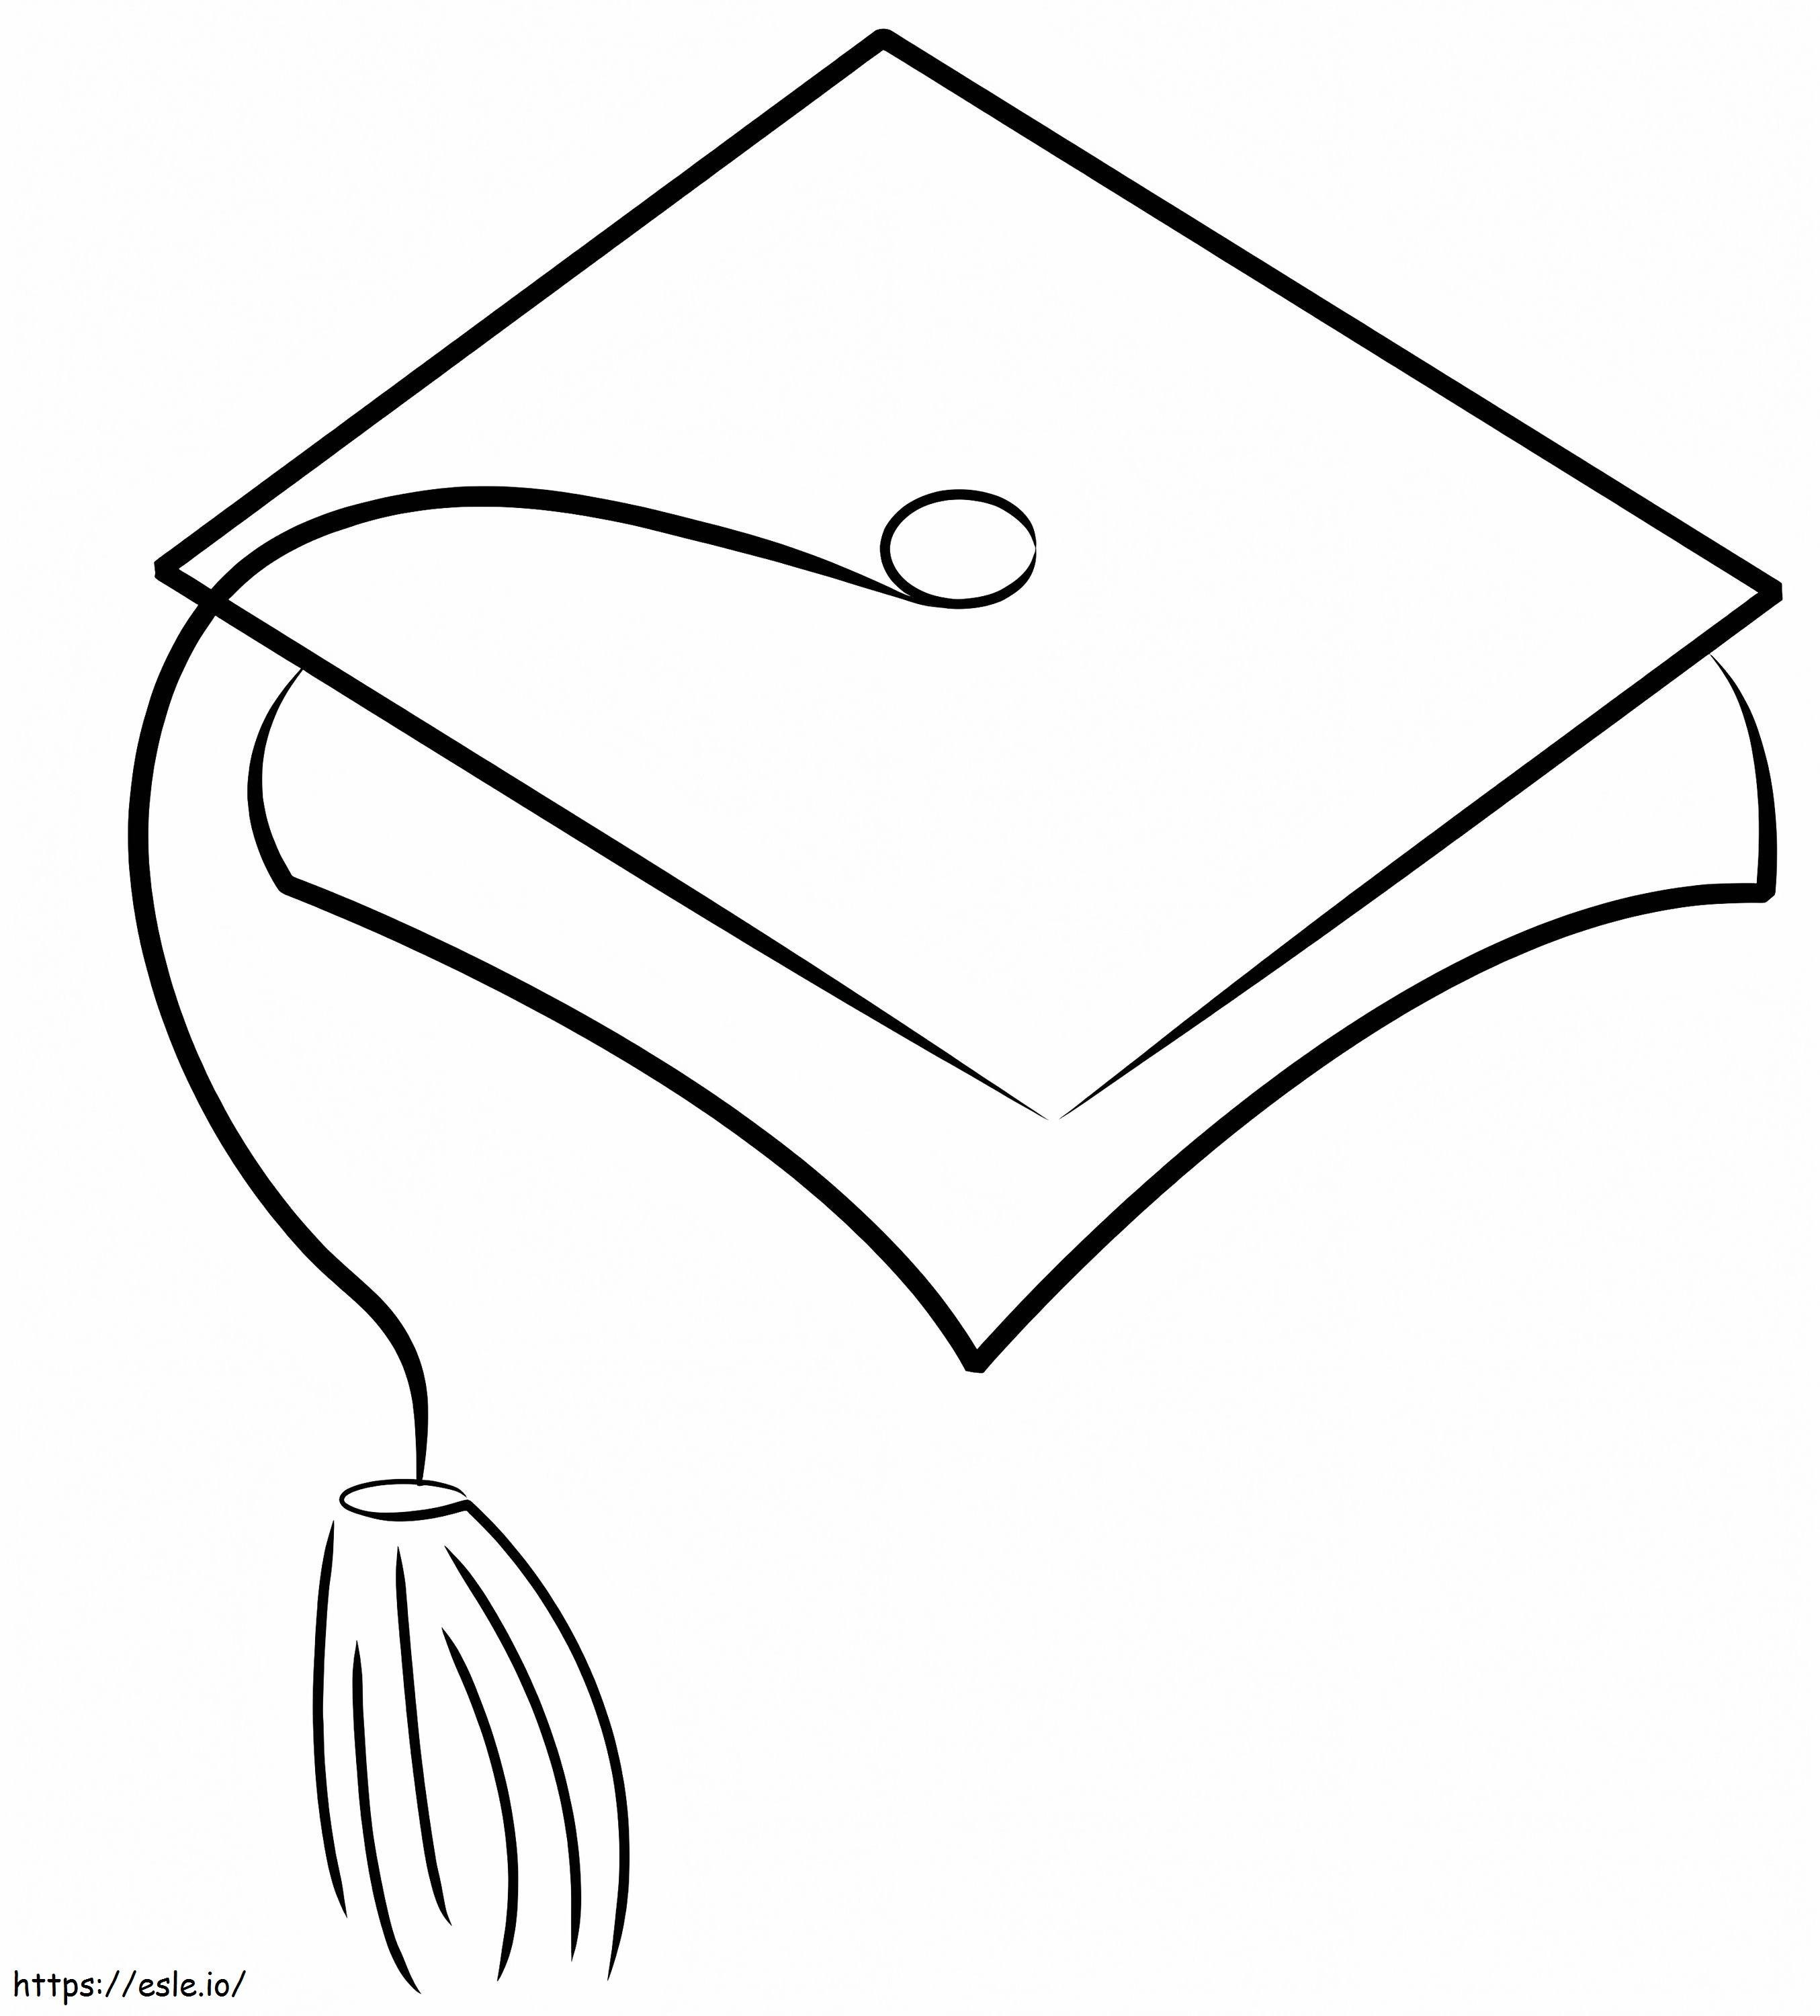 Printable Graduation Cap coloring page